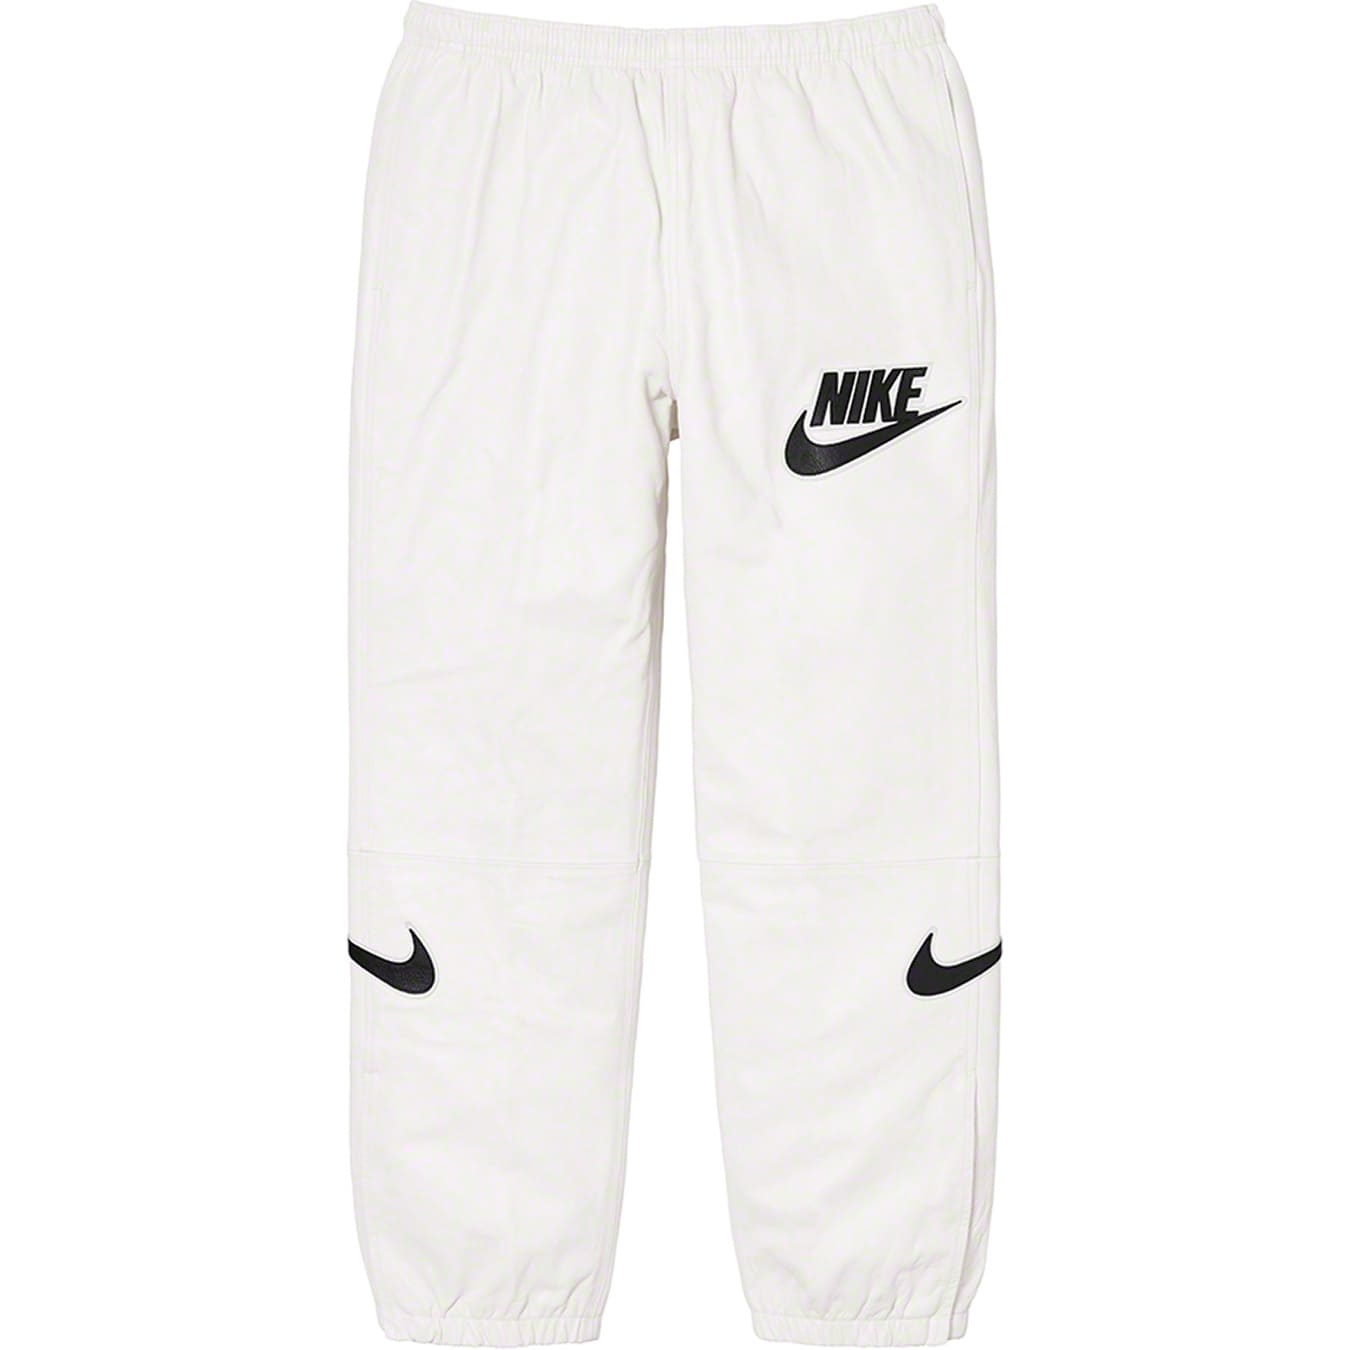 Supreme®/Nike® Leather Warm Up Pant